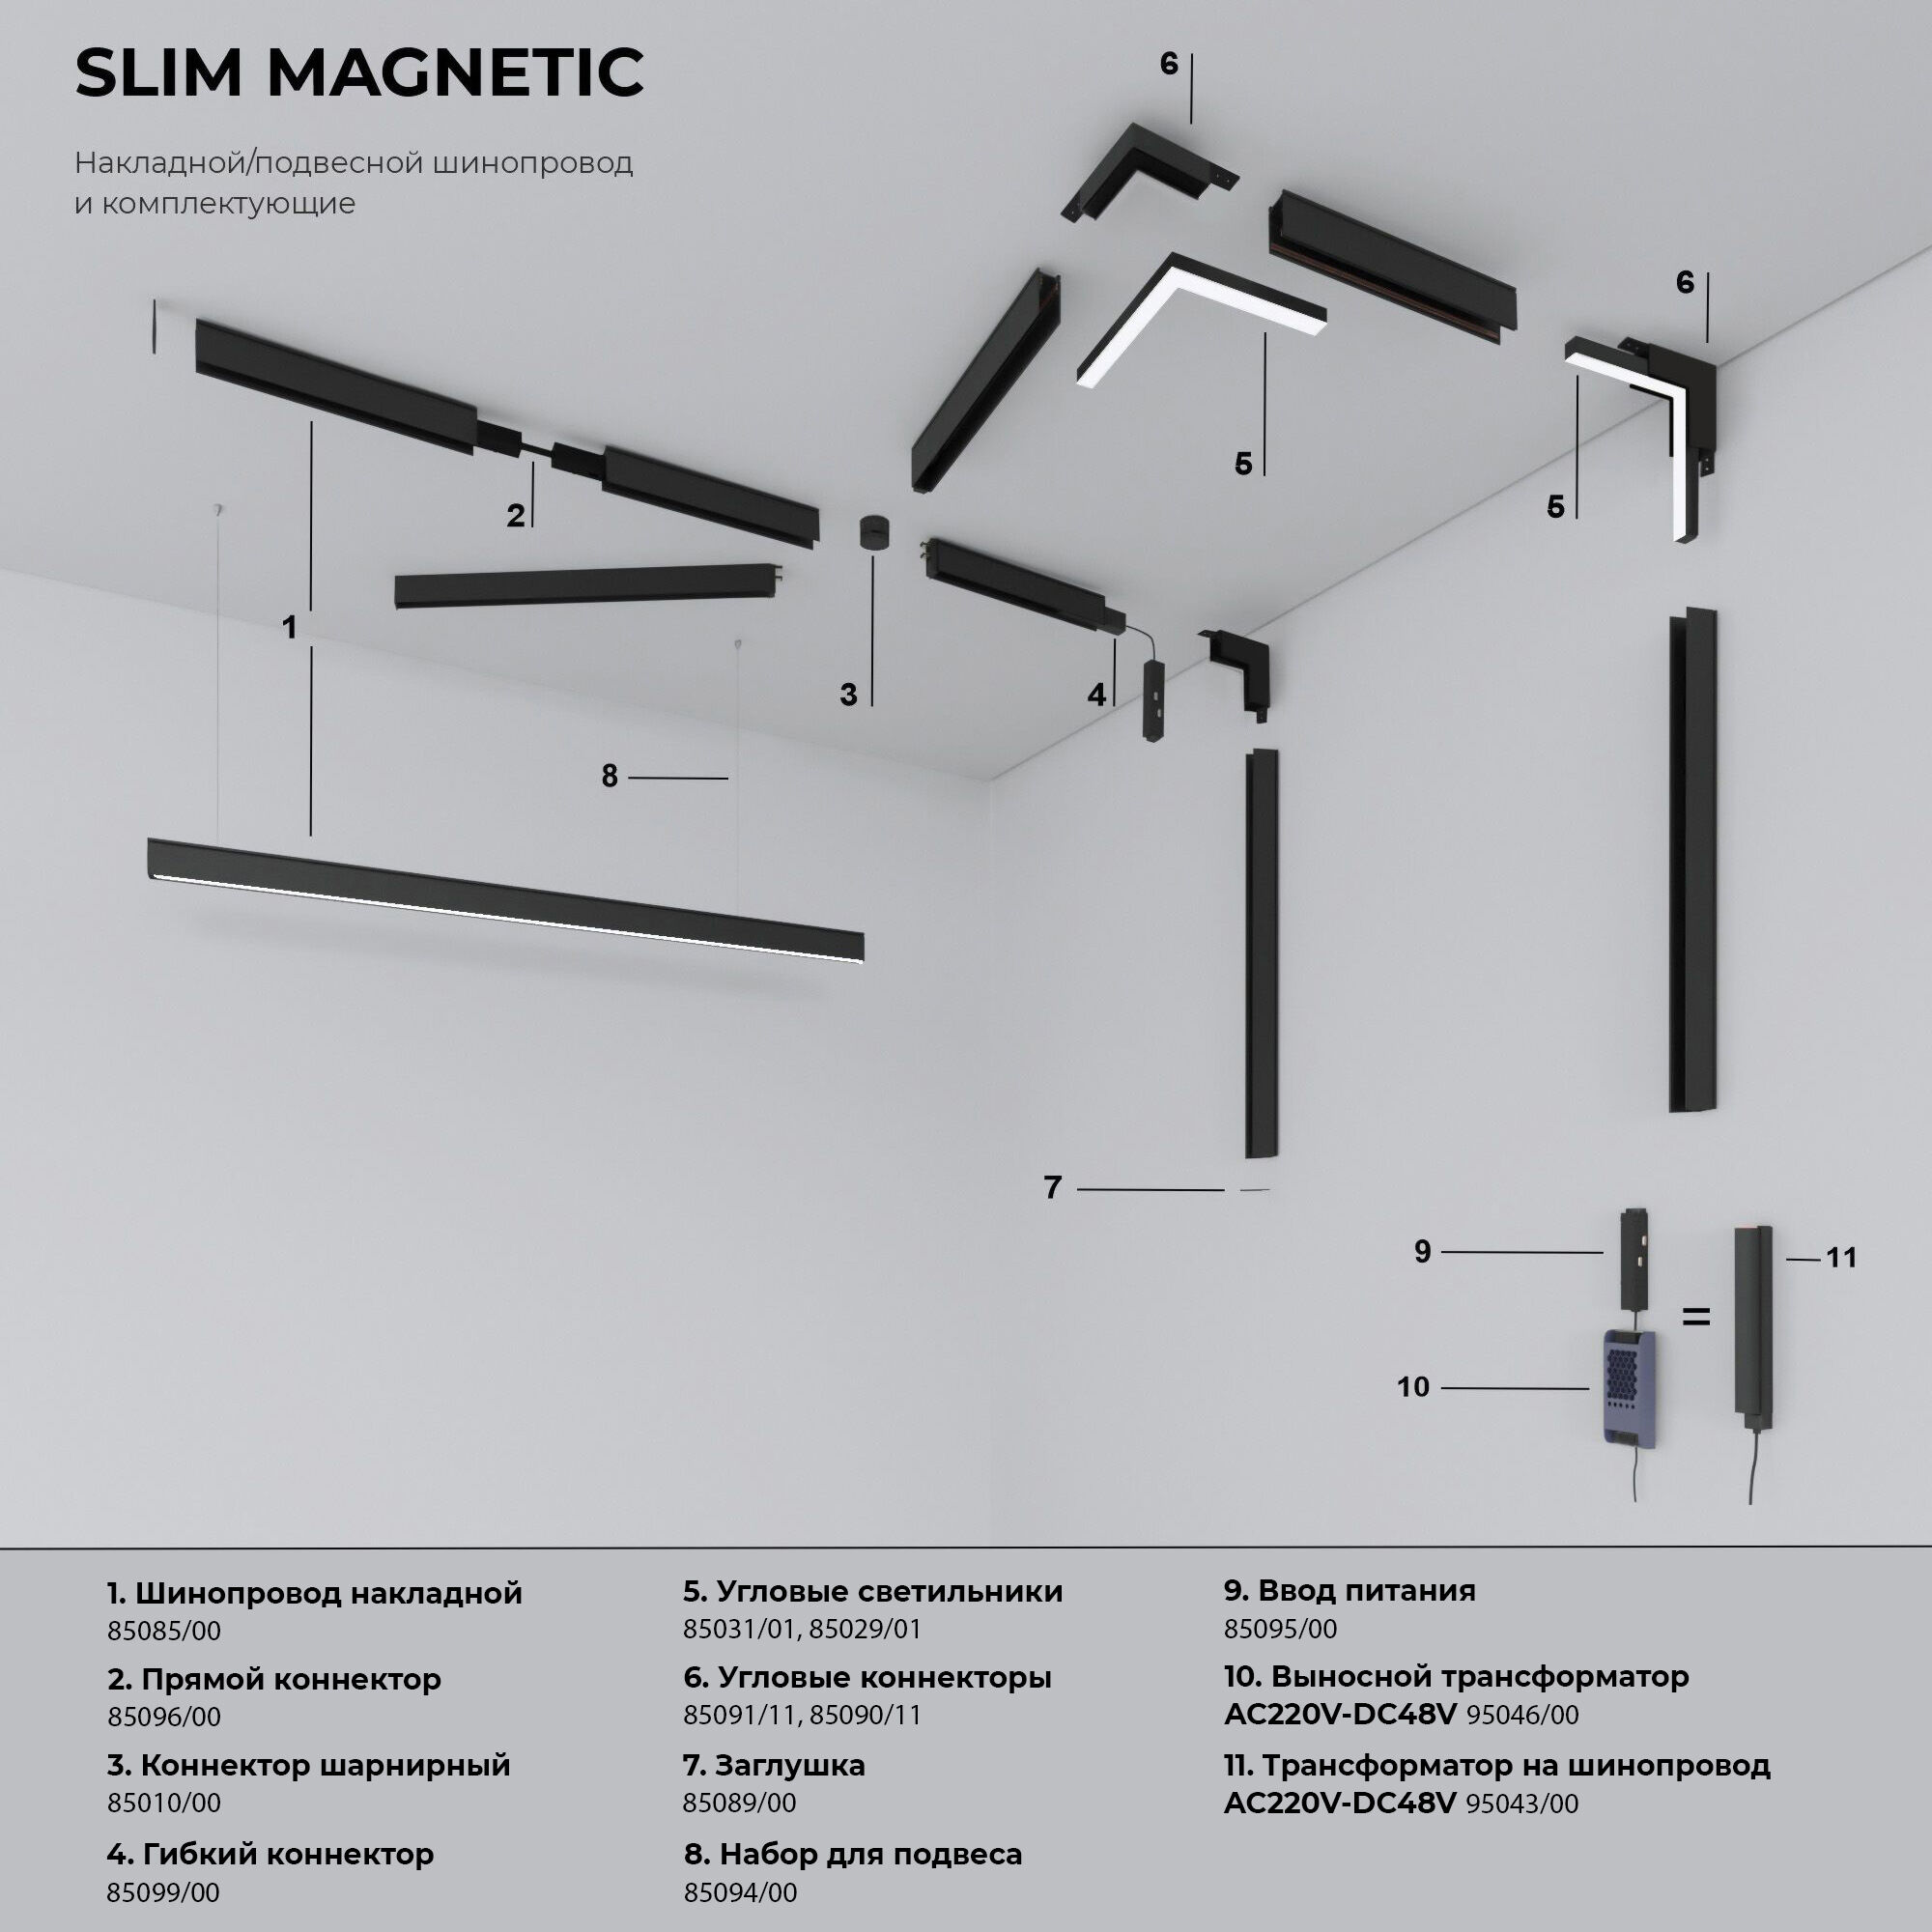 Slim Magnetic Набор для подвеса белый 2м 85094/00